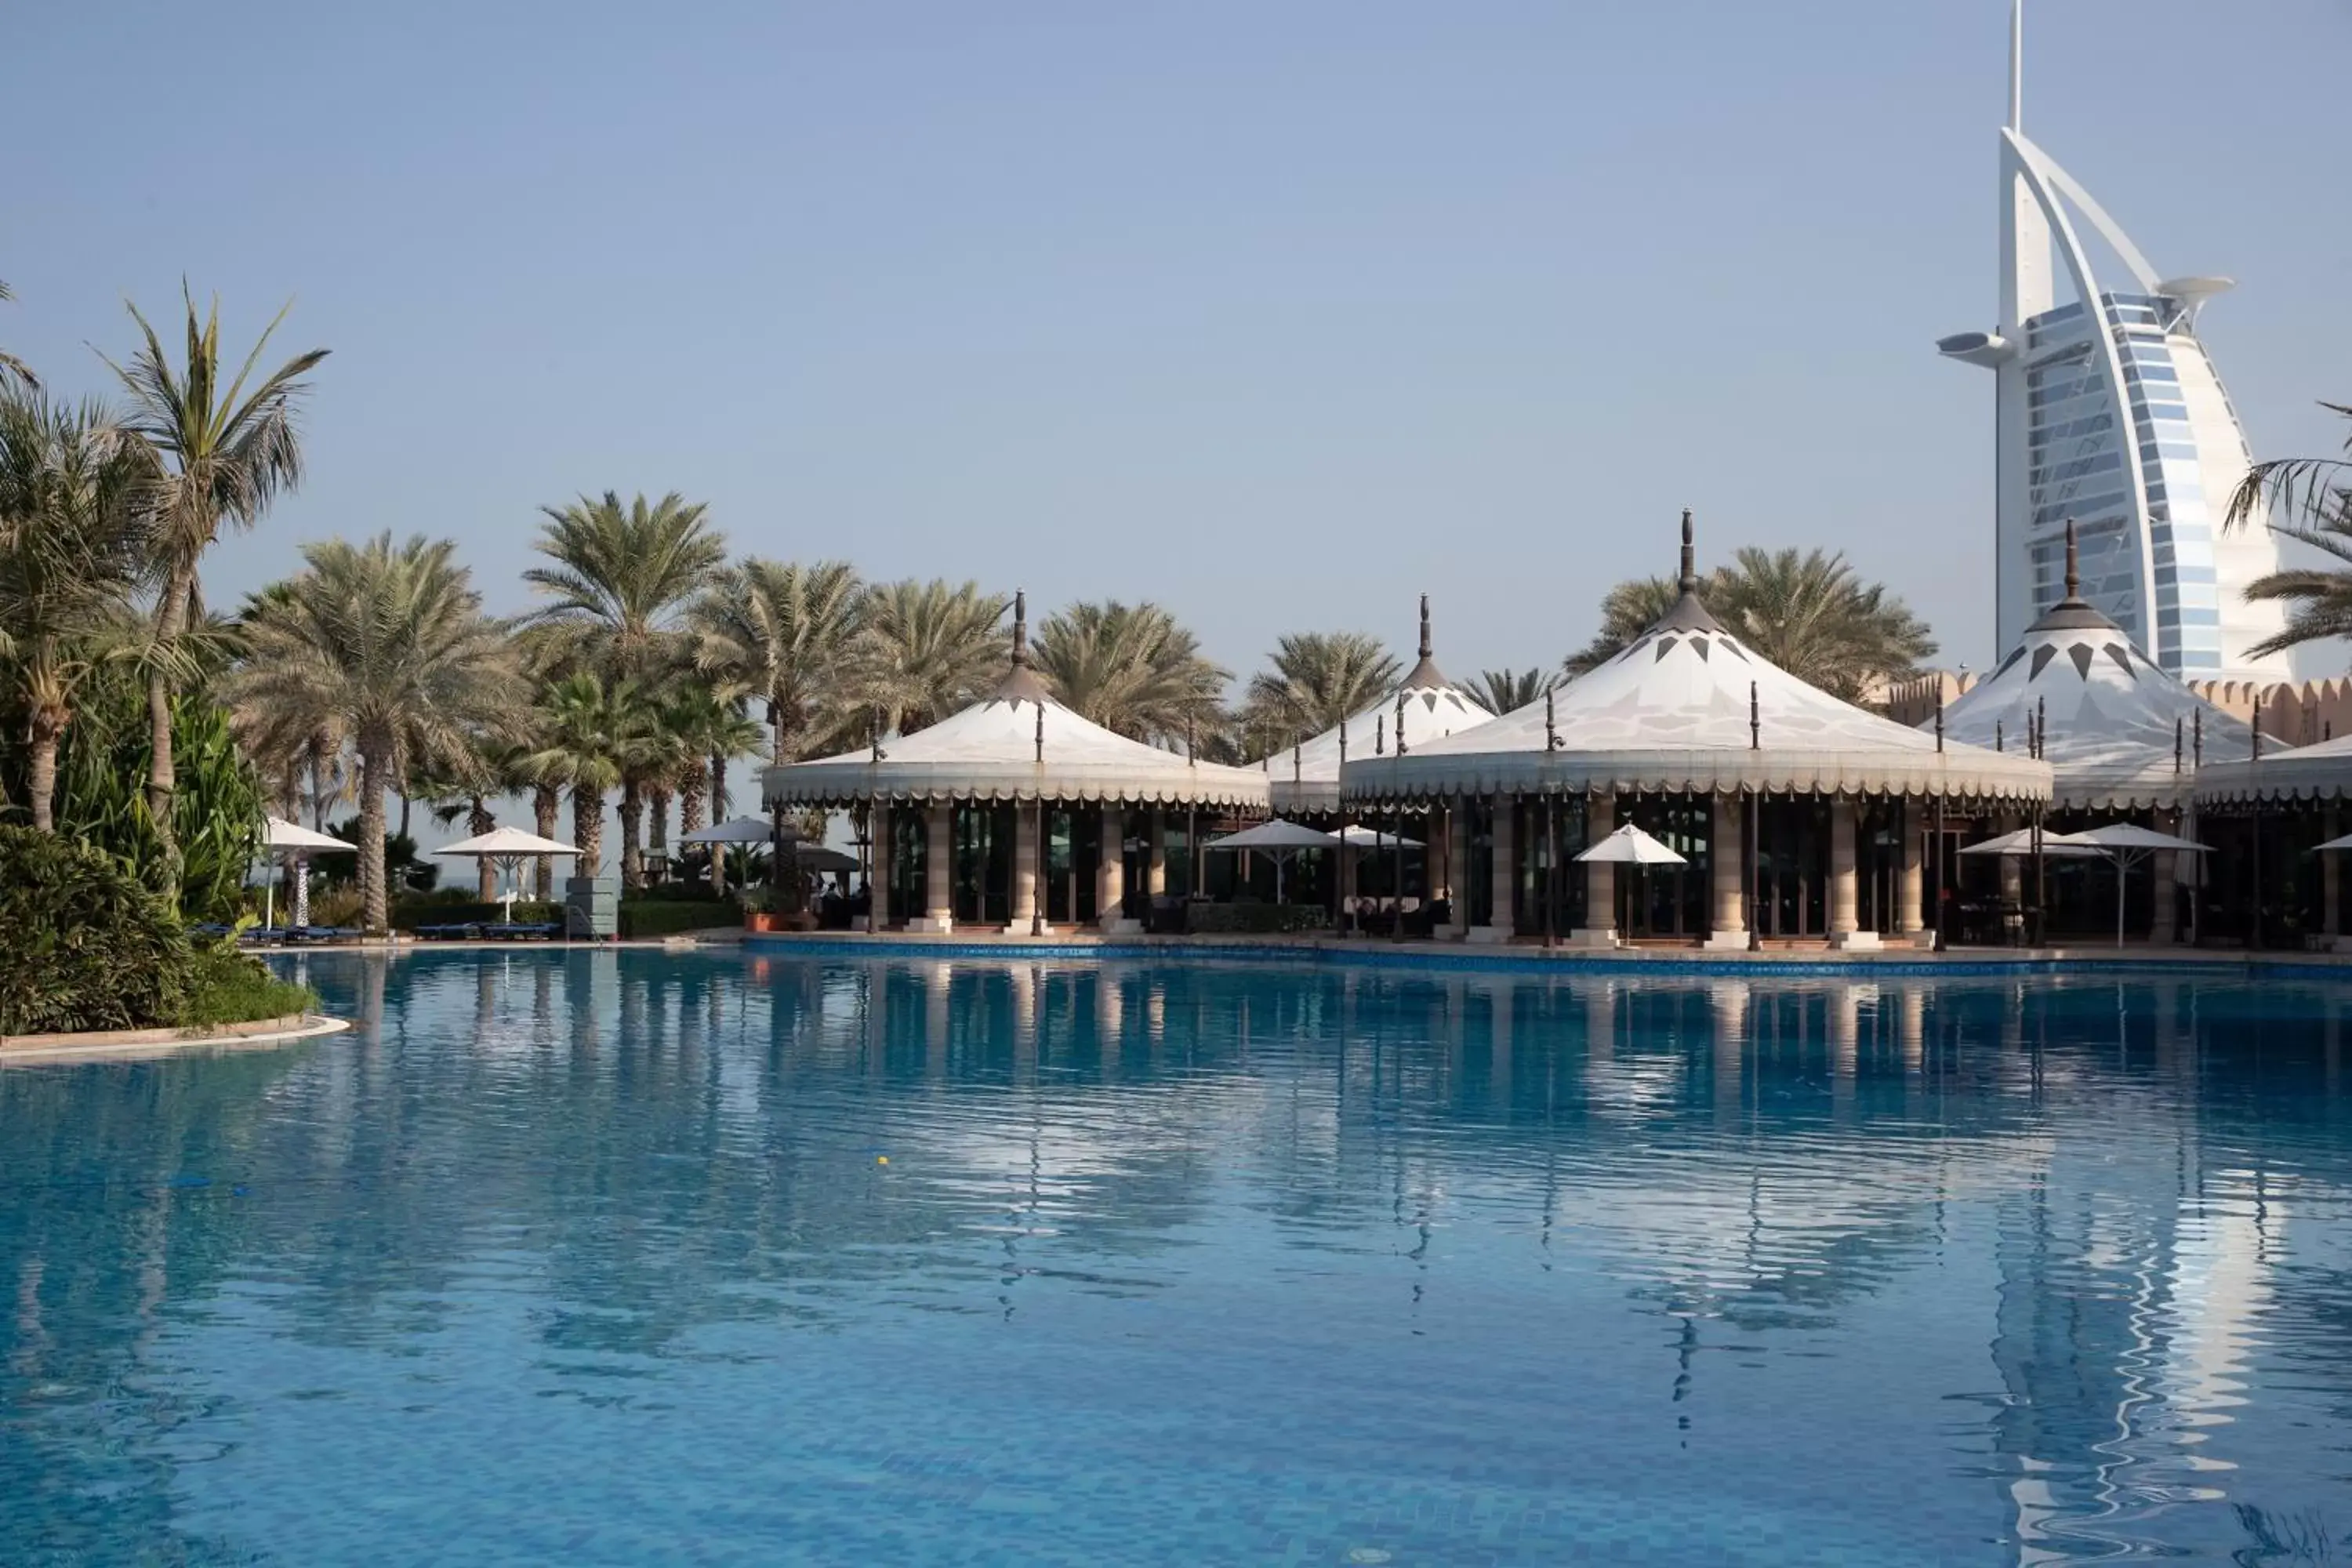 On site, Swimming Pool in Jumeirah Al Qasr